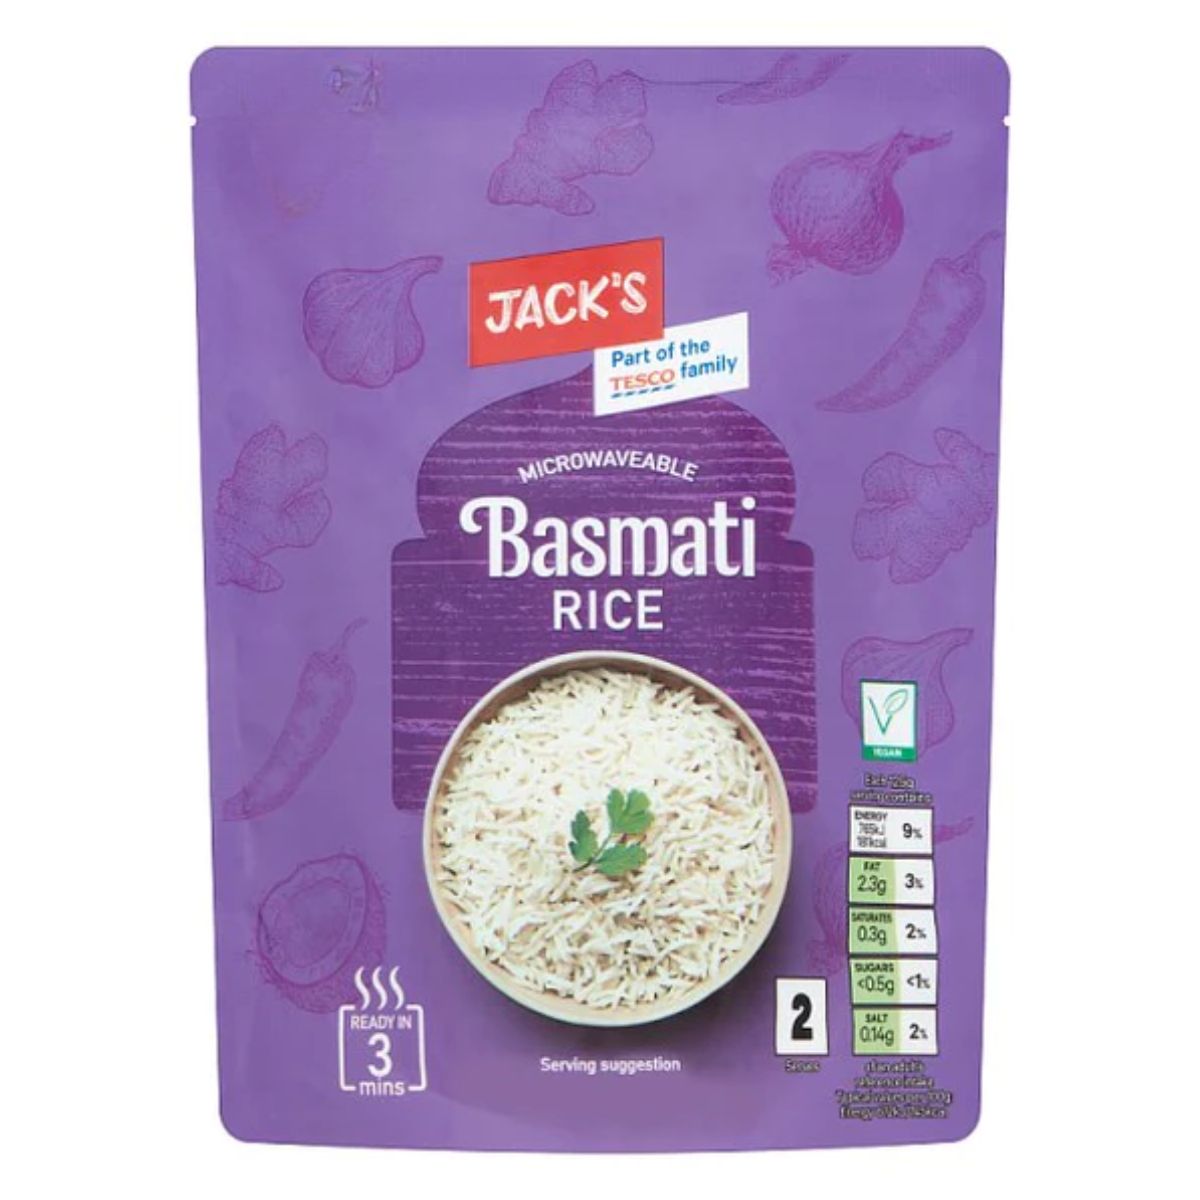 Packaging of Jacks - Microwavable Basmati Rice - 250g, ready in 3 minutes.